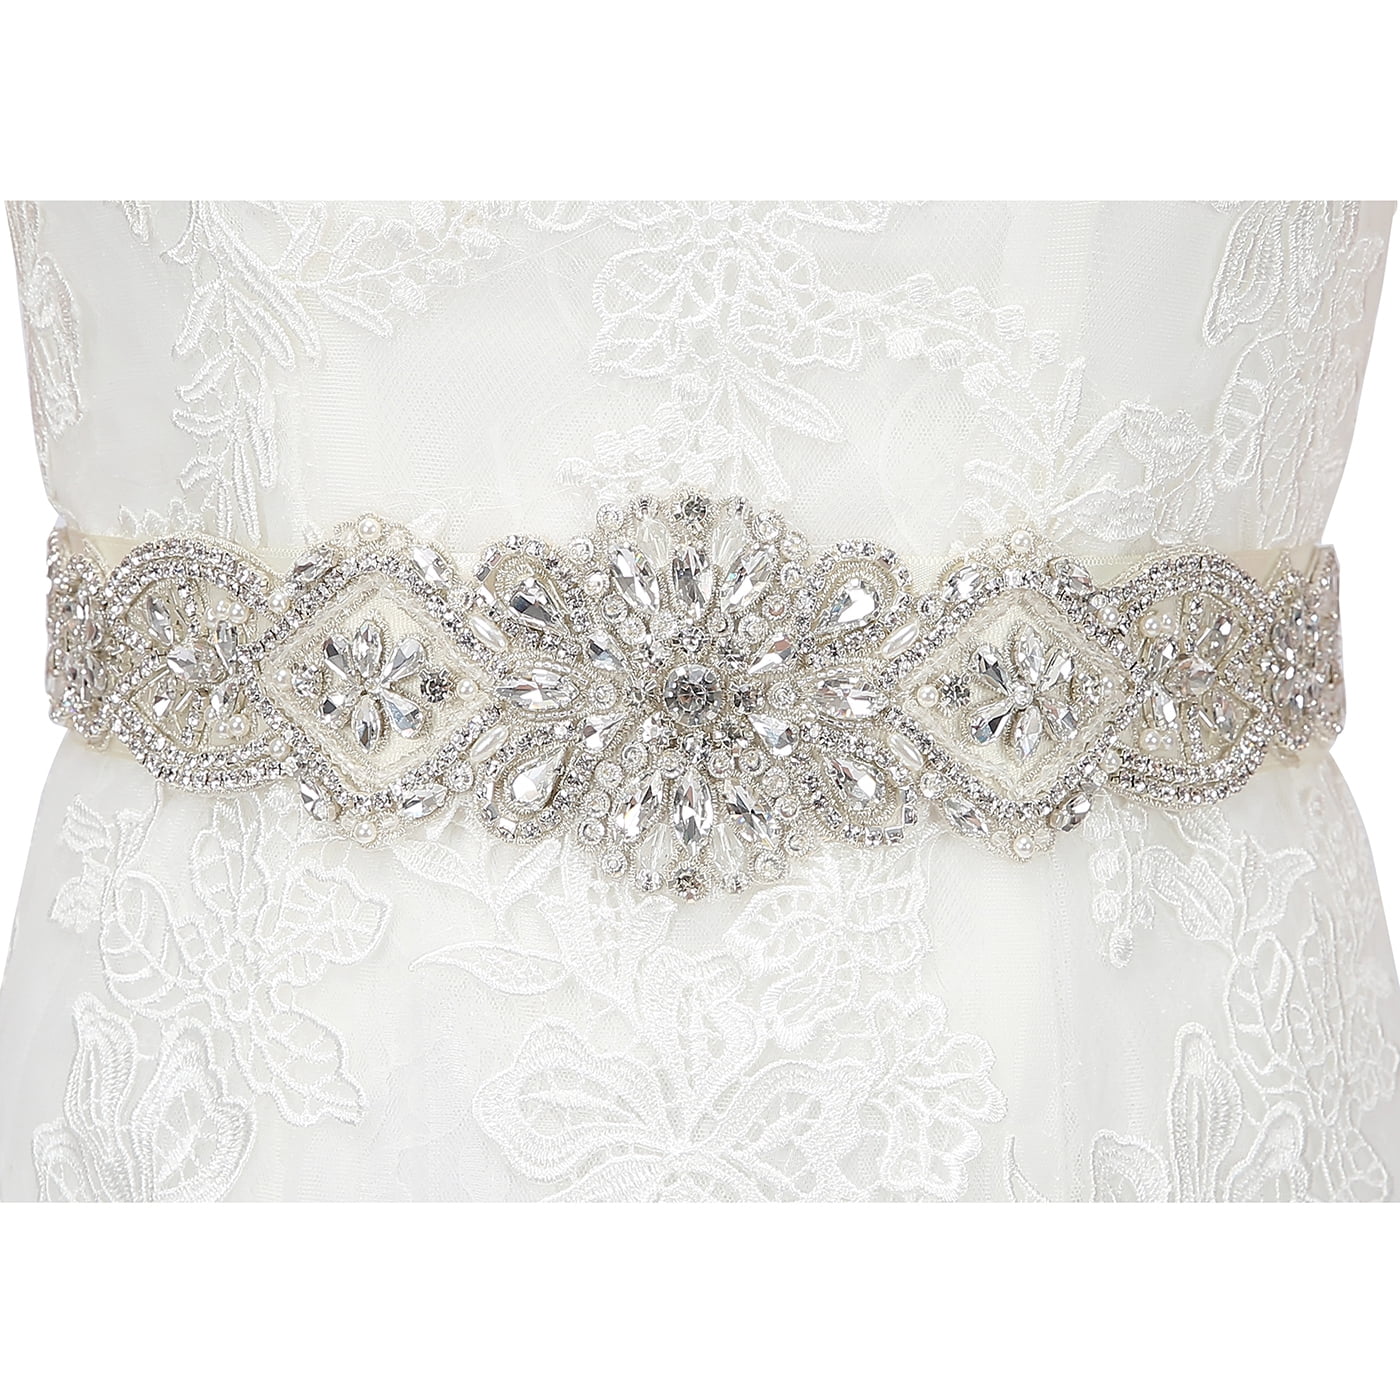 Rhinestone Bridal Belt Sashes for Women Dress Diamond Wedding Belts Sash Ribbon for Bridesmaid Prom Gowns（White）